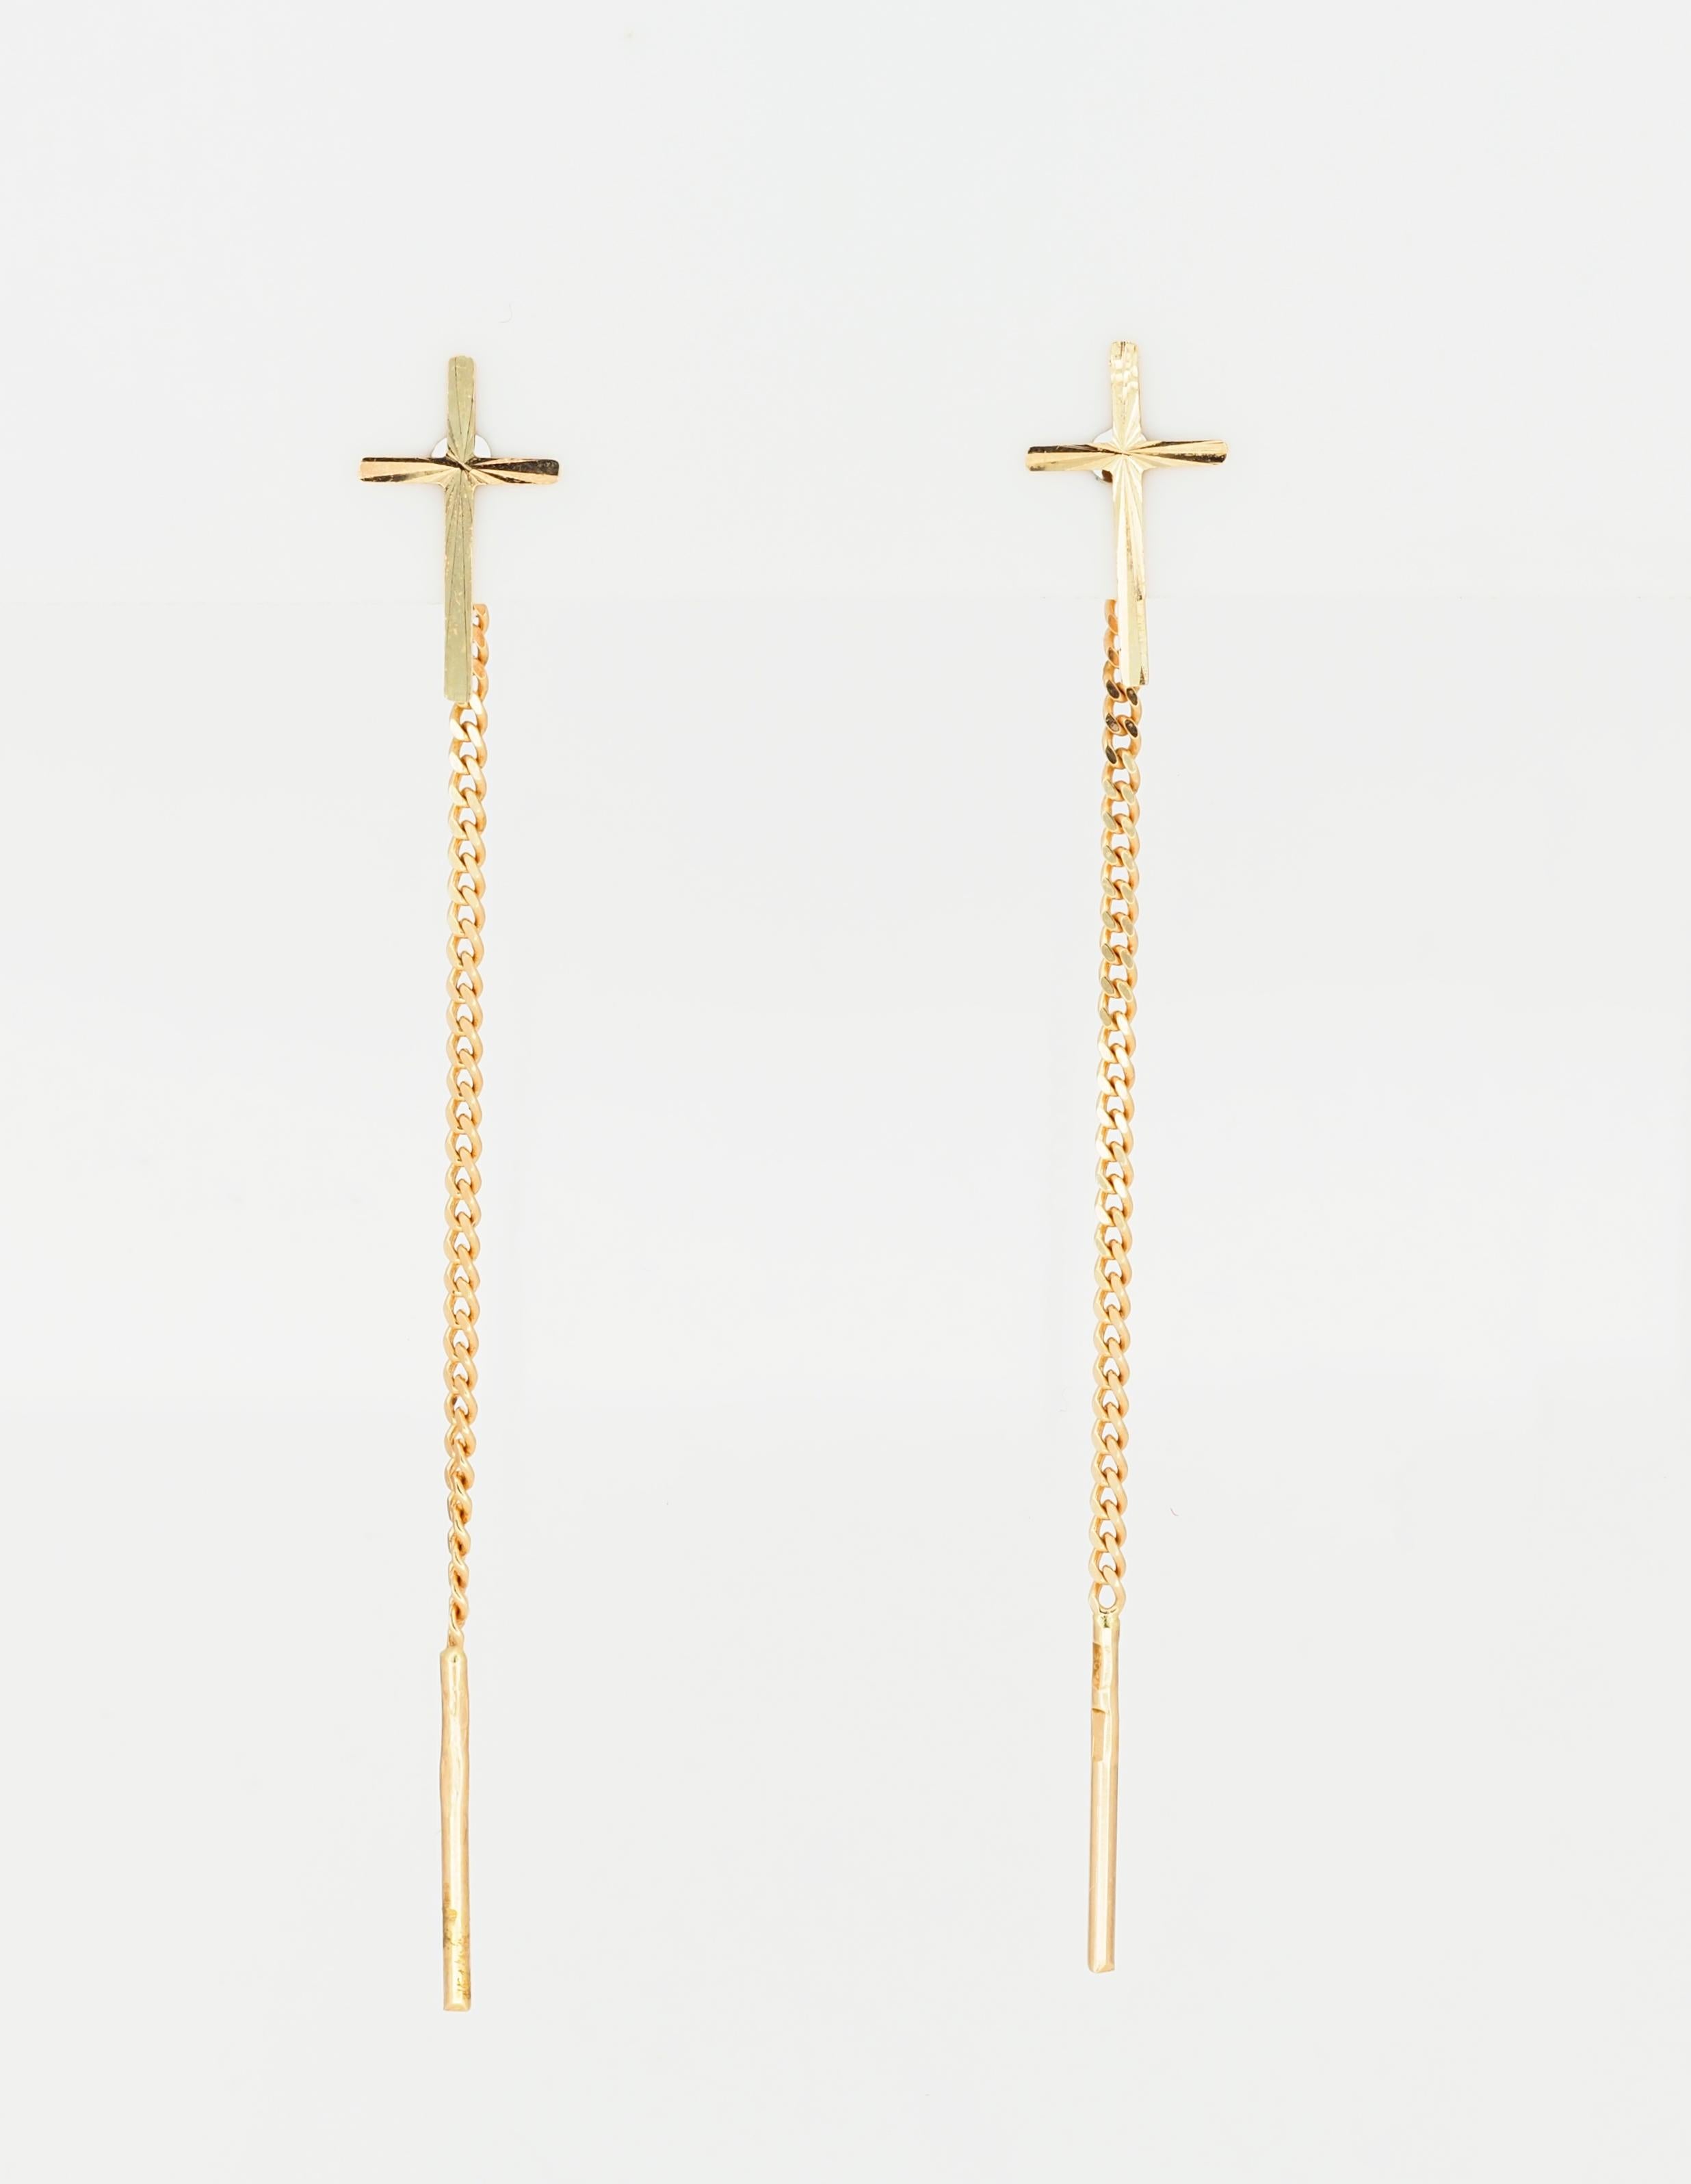 14 k yellow gold cross earrings. Everyday cross earrings. Cross on chain earrings. Cross Cable Chain Earrings.

Metal: 14k yellow gold
Weight: 1.2 g.
Size:  6.2 sm - earring lenght
Pendant size: 8x10mm
Type of earring: Hanging earring


 